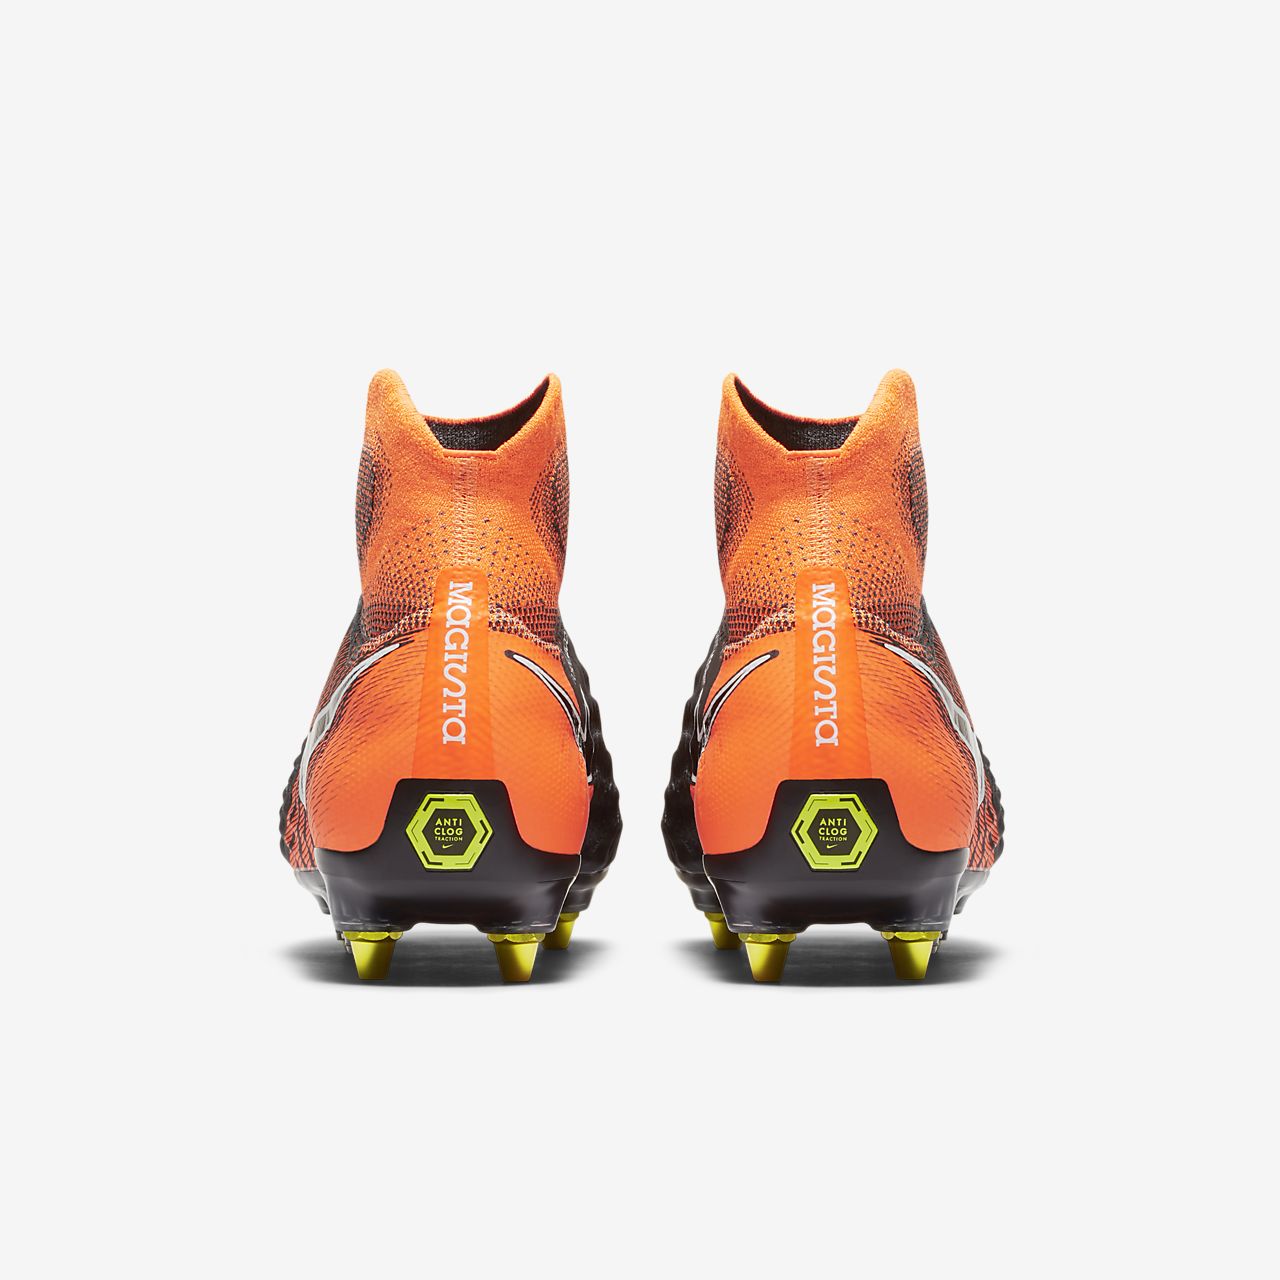 Nike Magista Obra Radiant Reveal Pack Review + On Feet